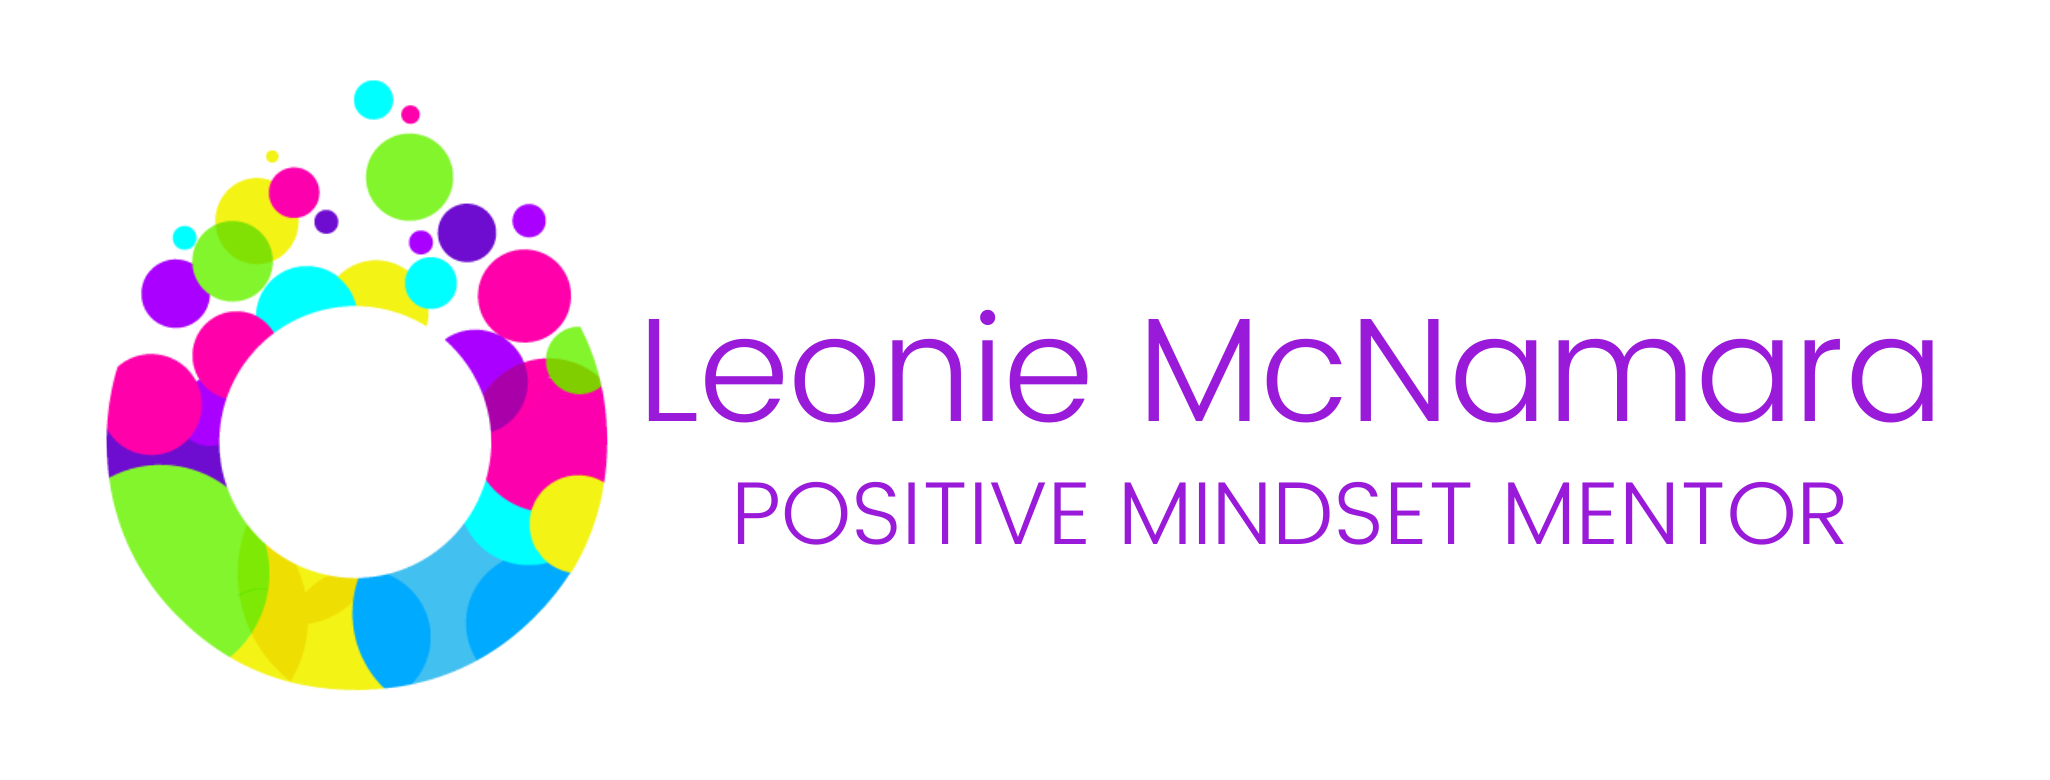 Leonie McNamara logo